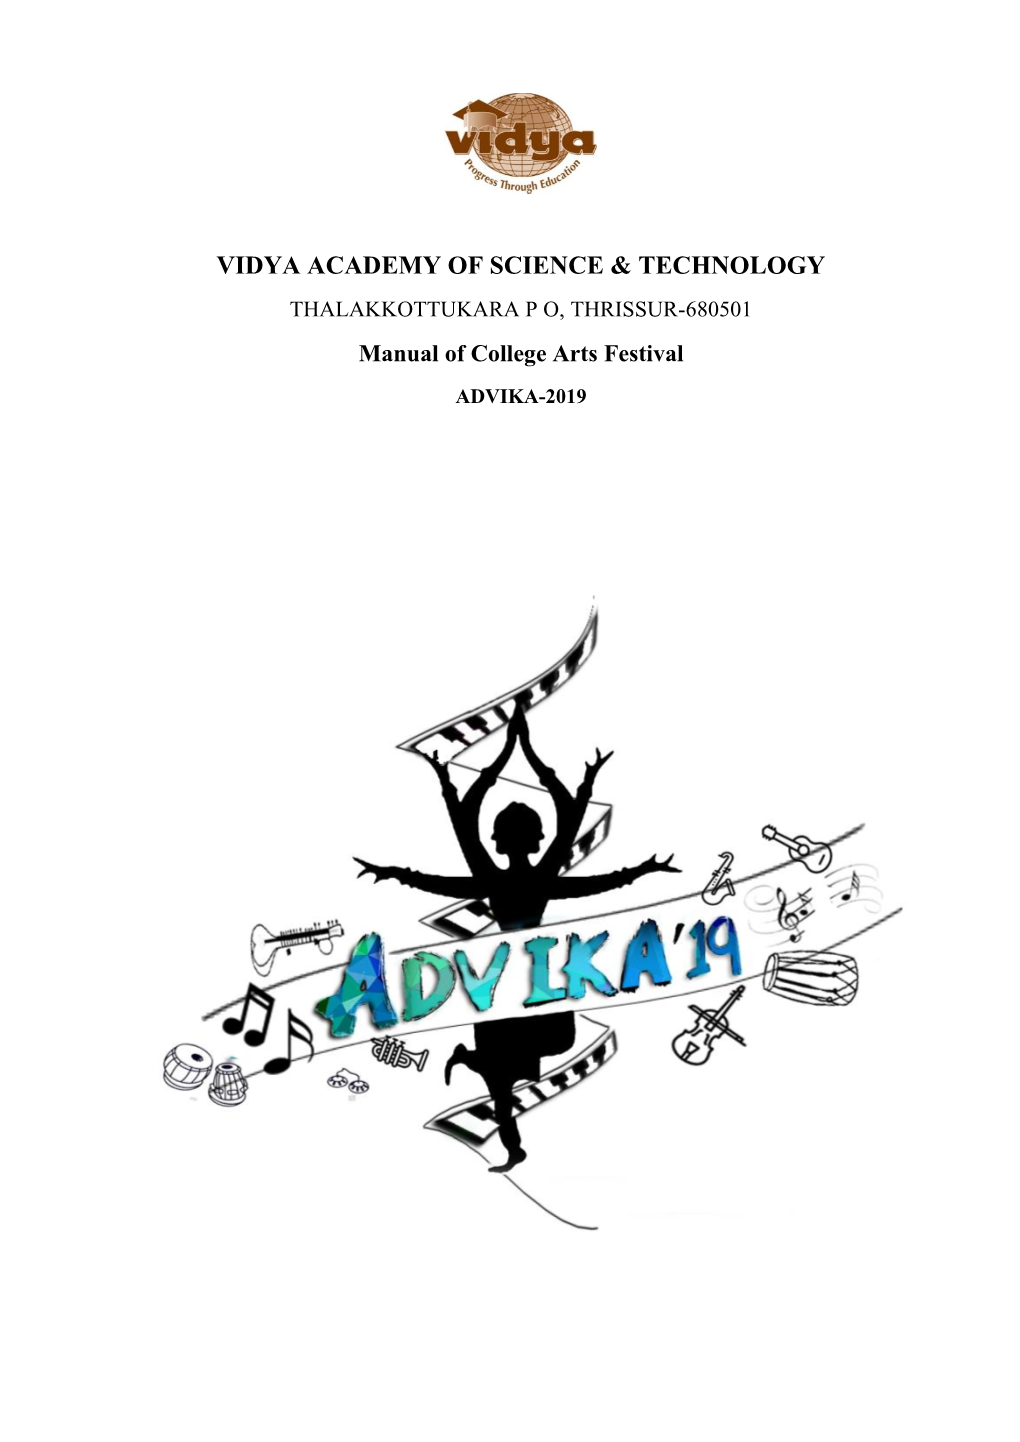 Manual of College Arts Festival ADVIKA-2019